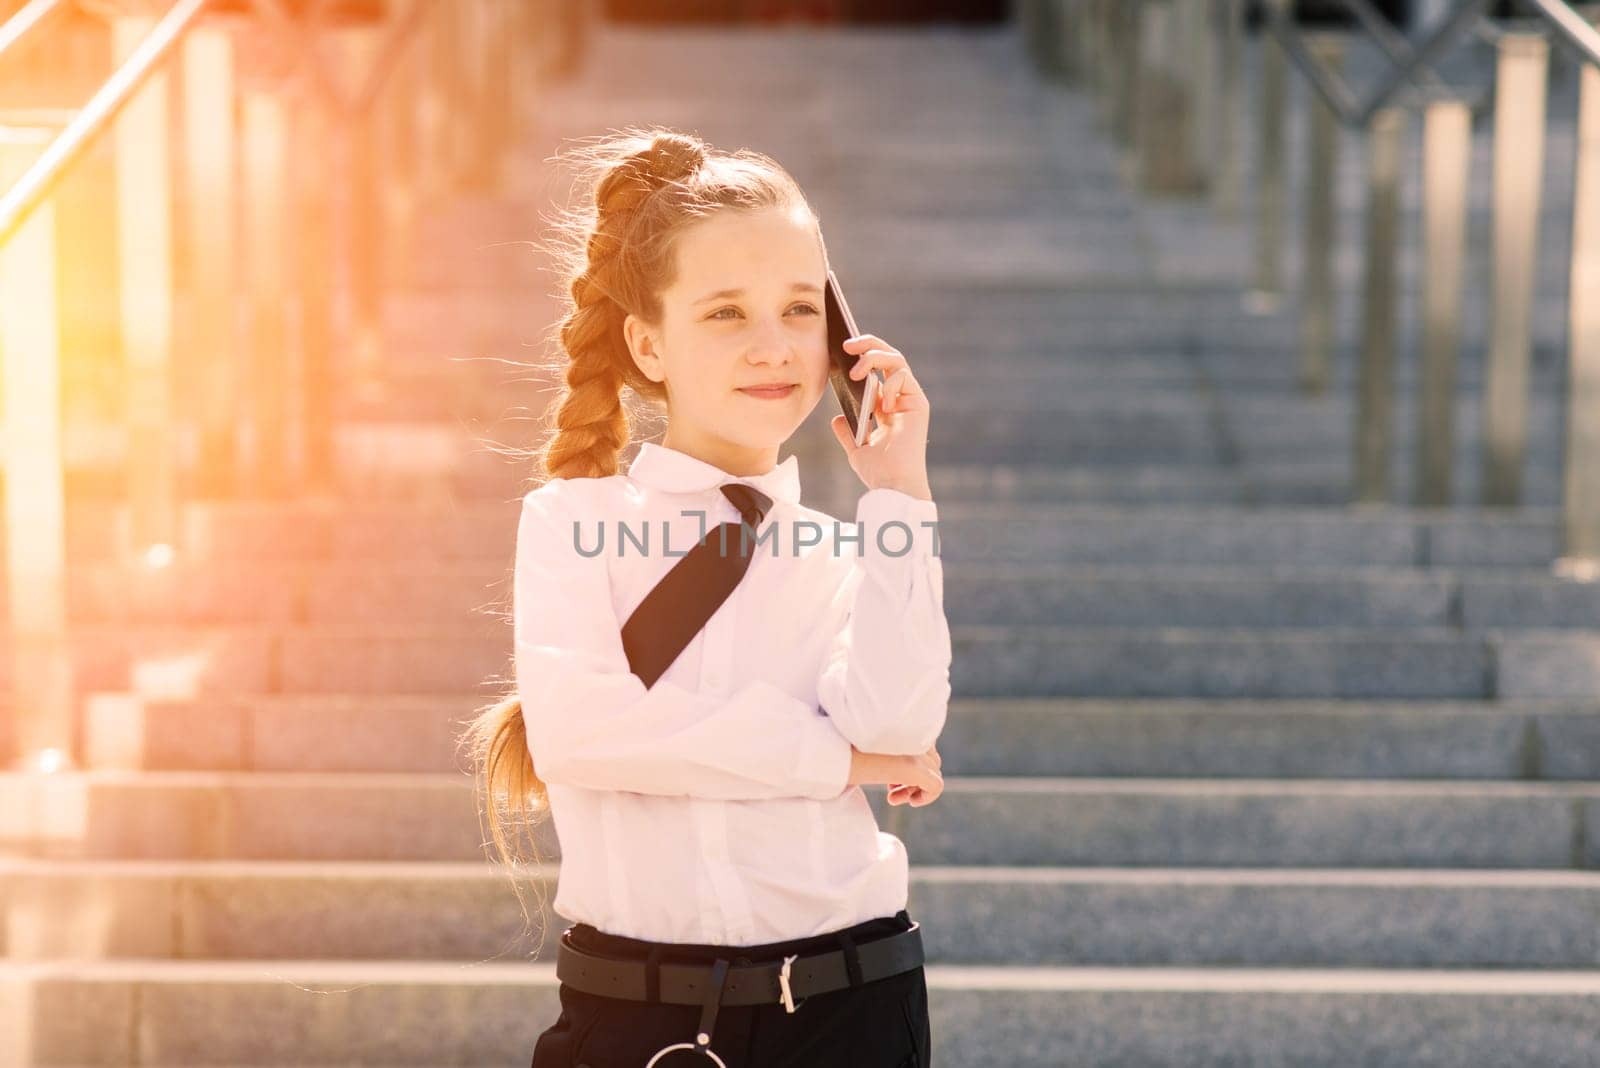 Little school girl having phone talk with friend. Modern life. Living in digital age.